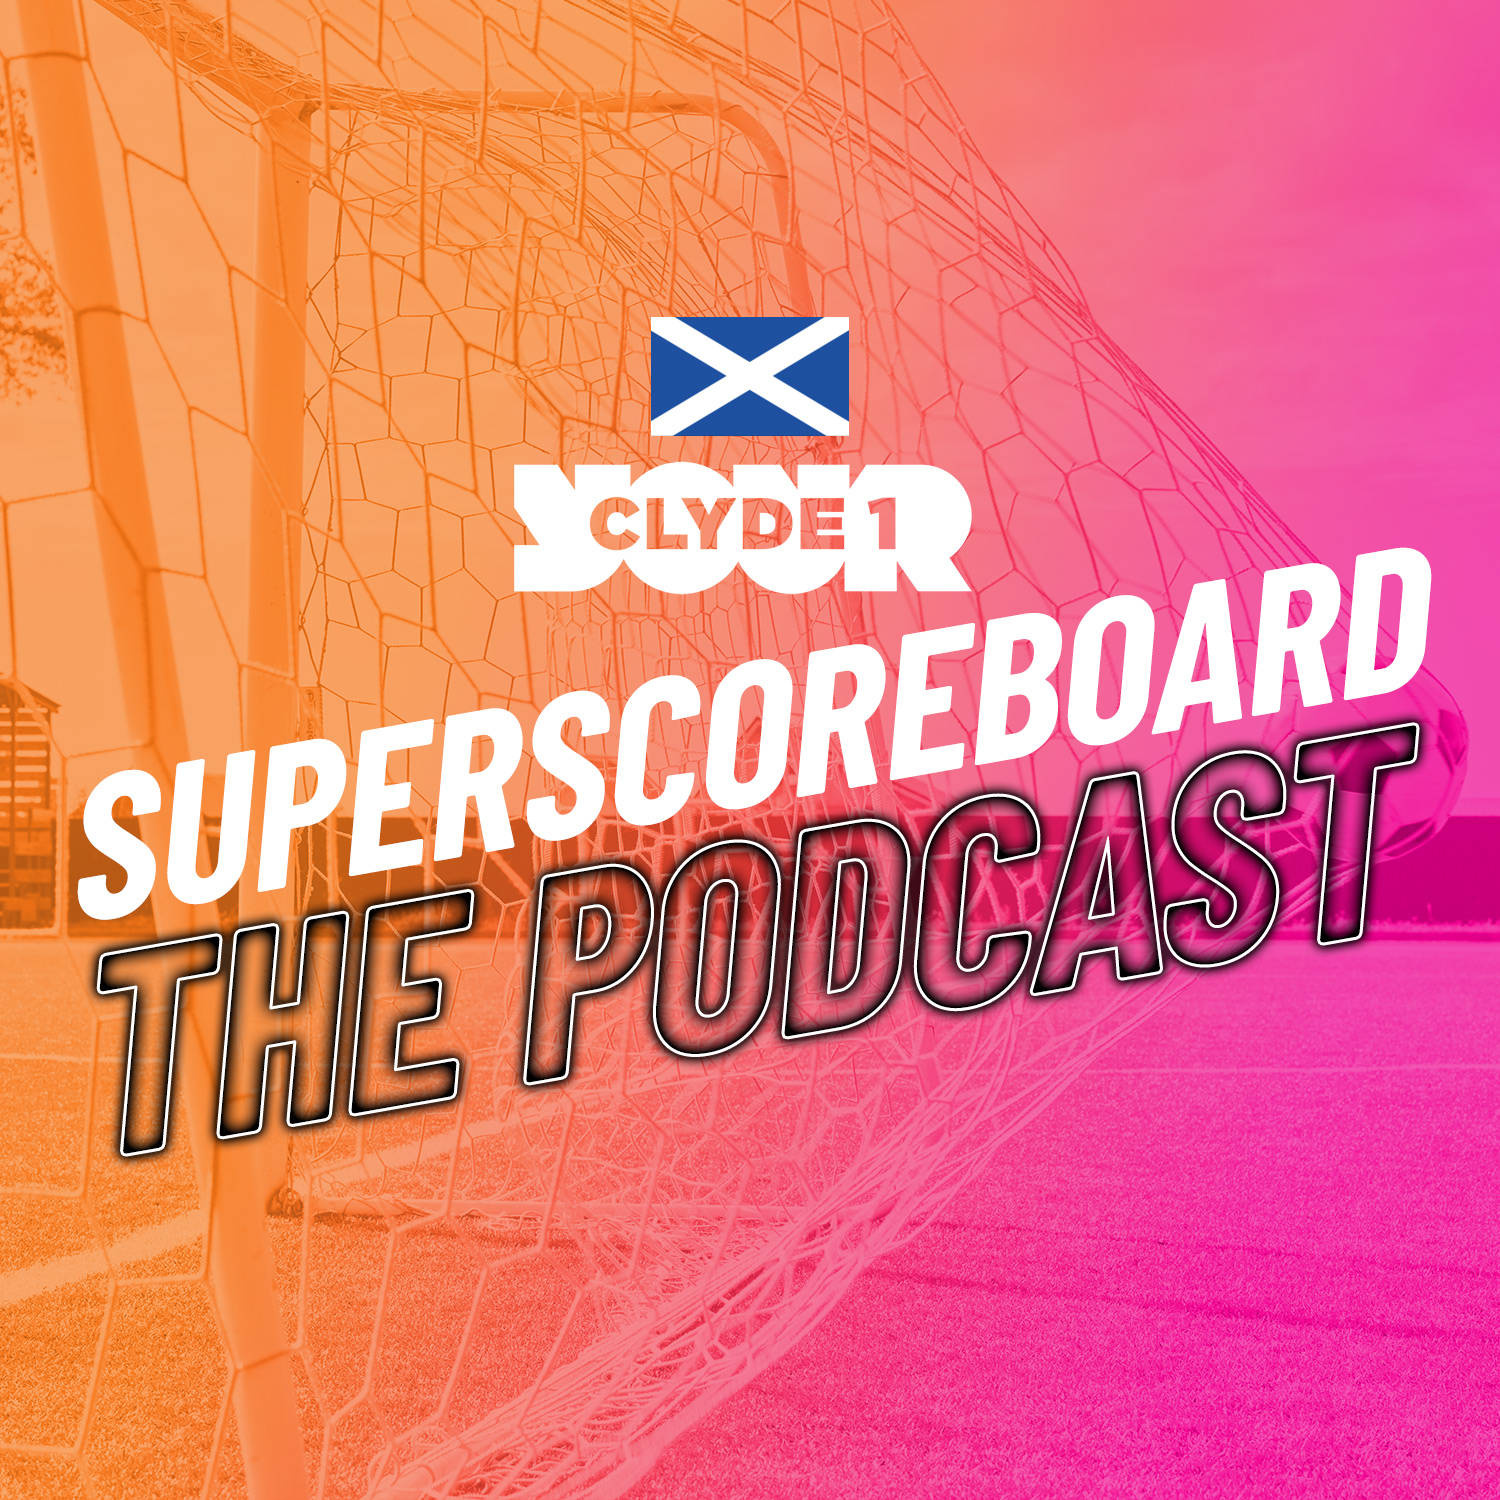 Saturday 30th December Clyde 1 Superscoreboard